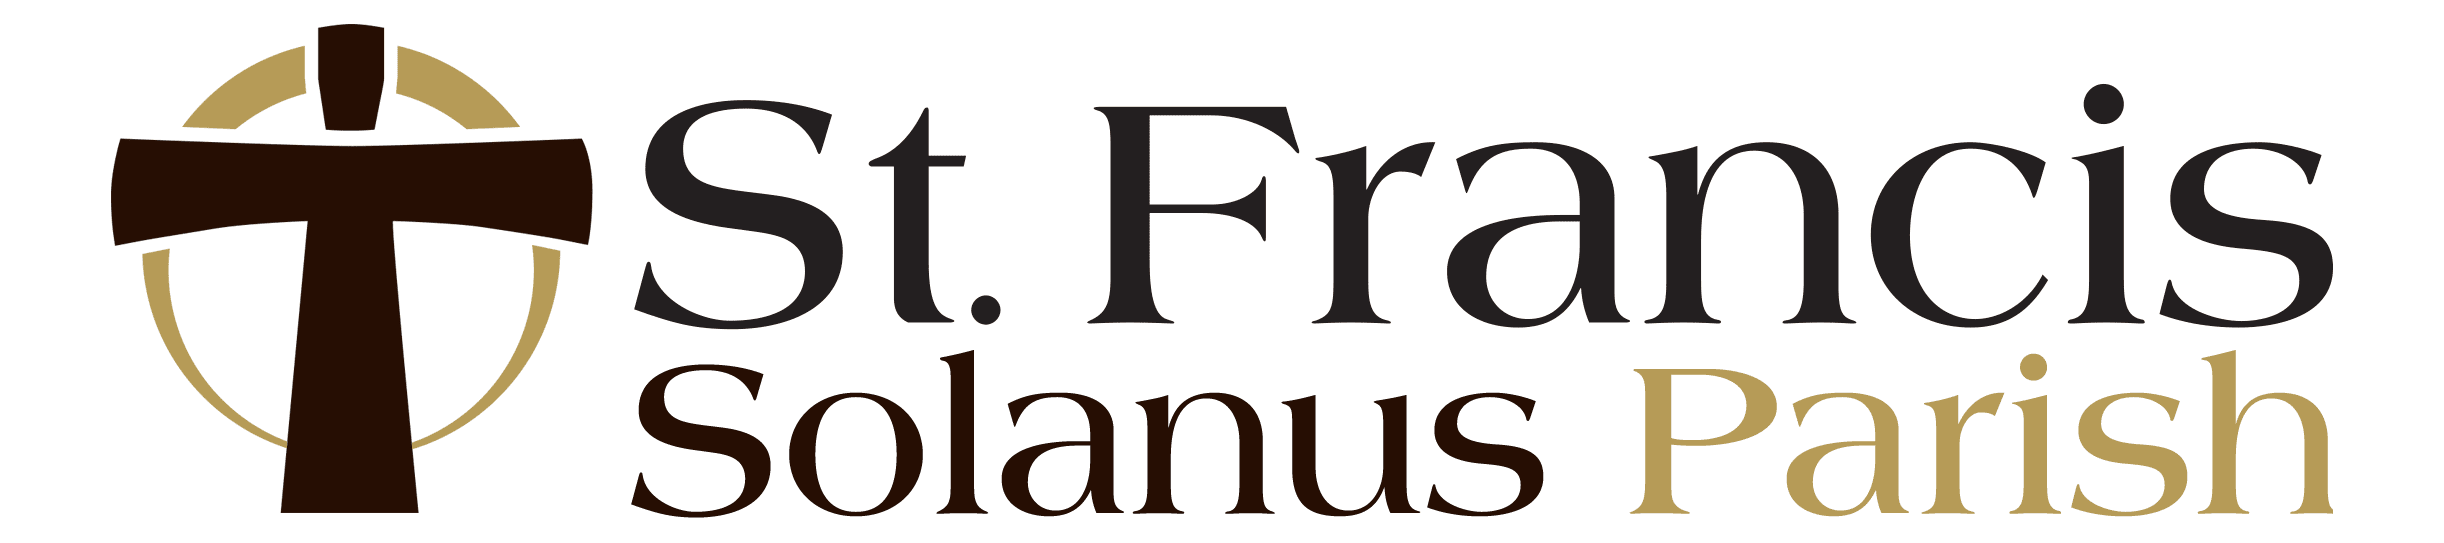 St. Francis logo